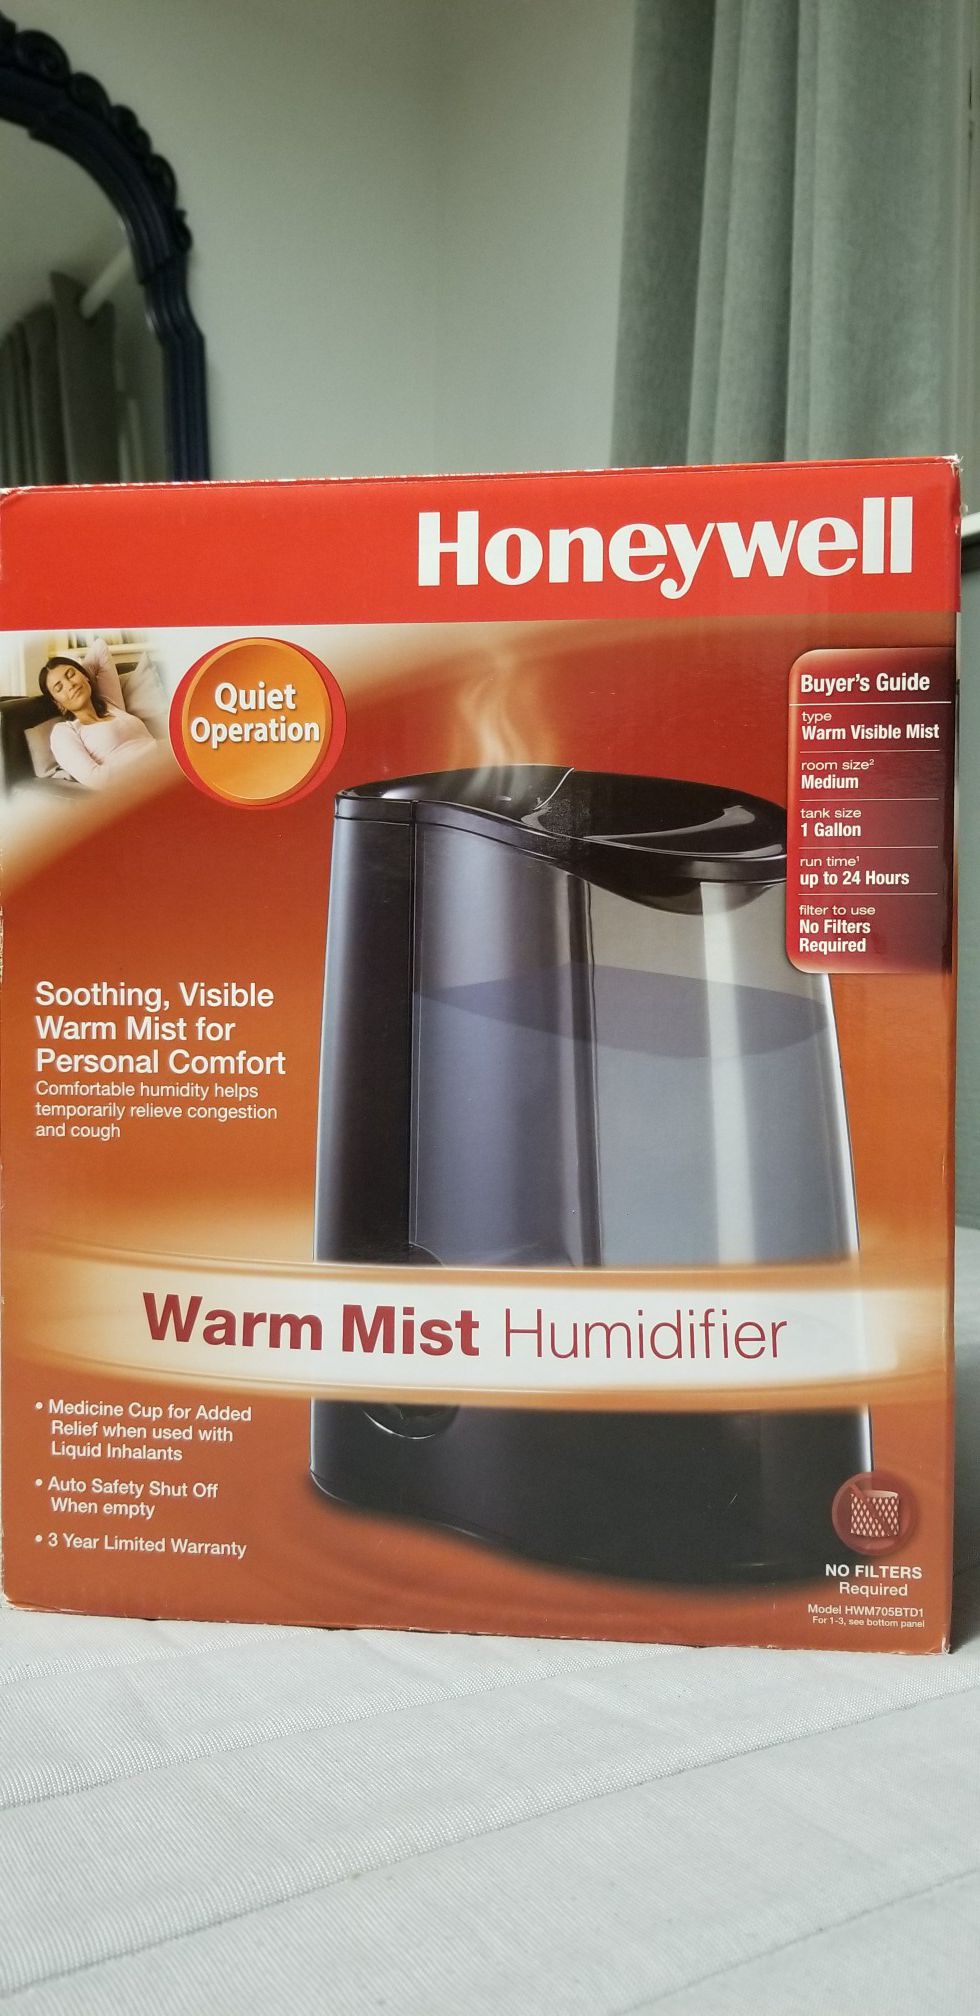 Honeywell's Warm Mist Humidifier Used